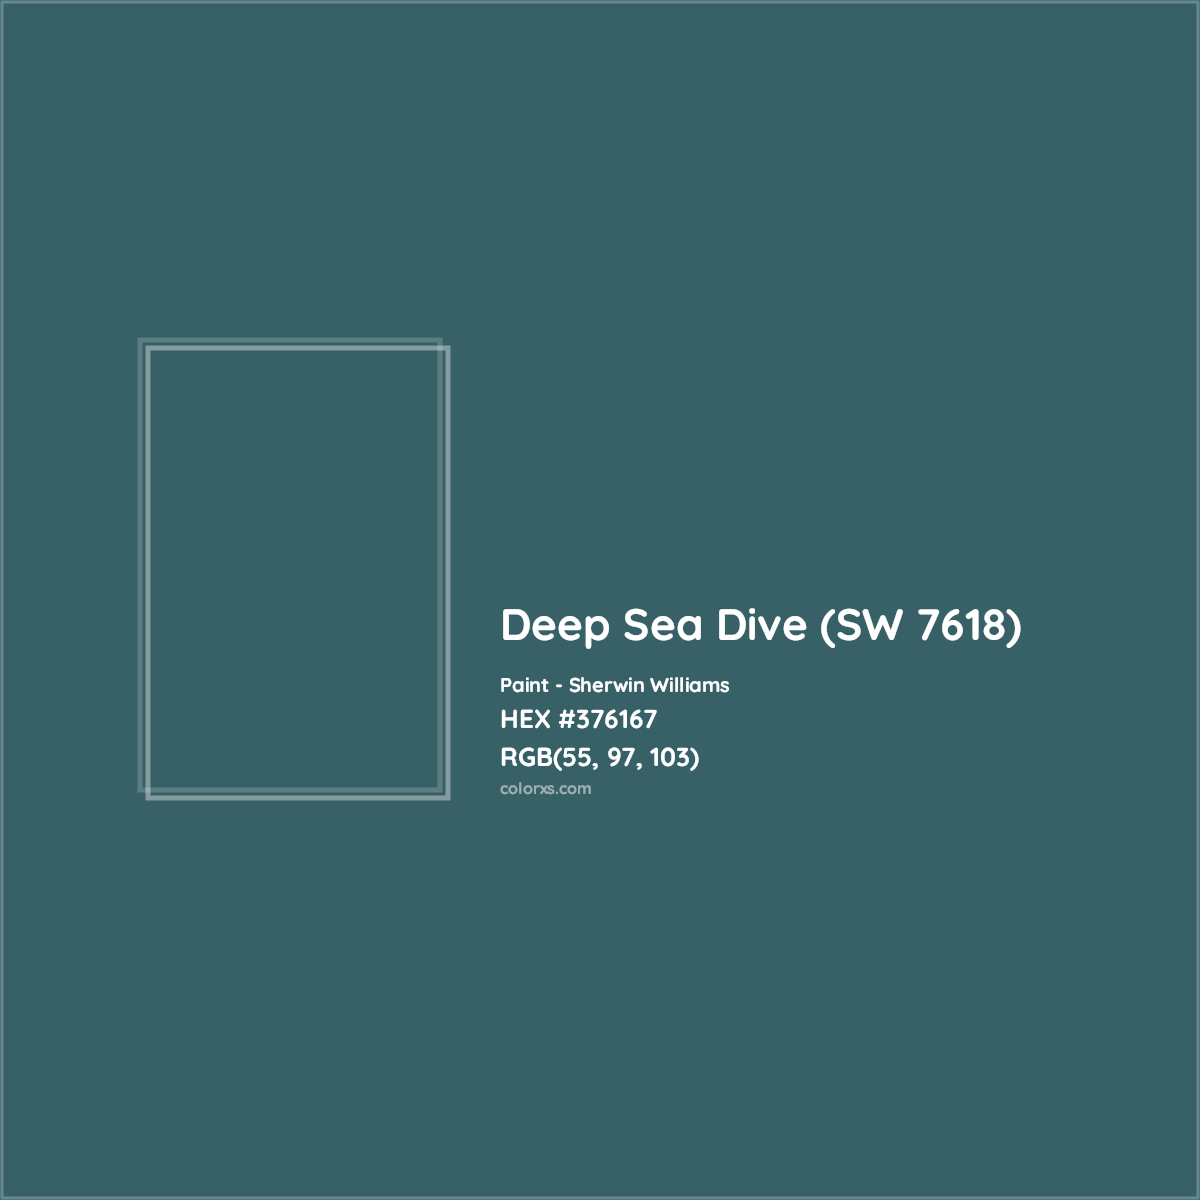 HEX #376167 Deep Sea Dive (SW 7618) Paint Sherwin Williams - Color Code